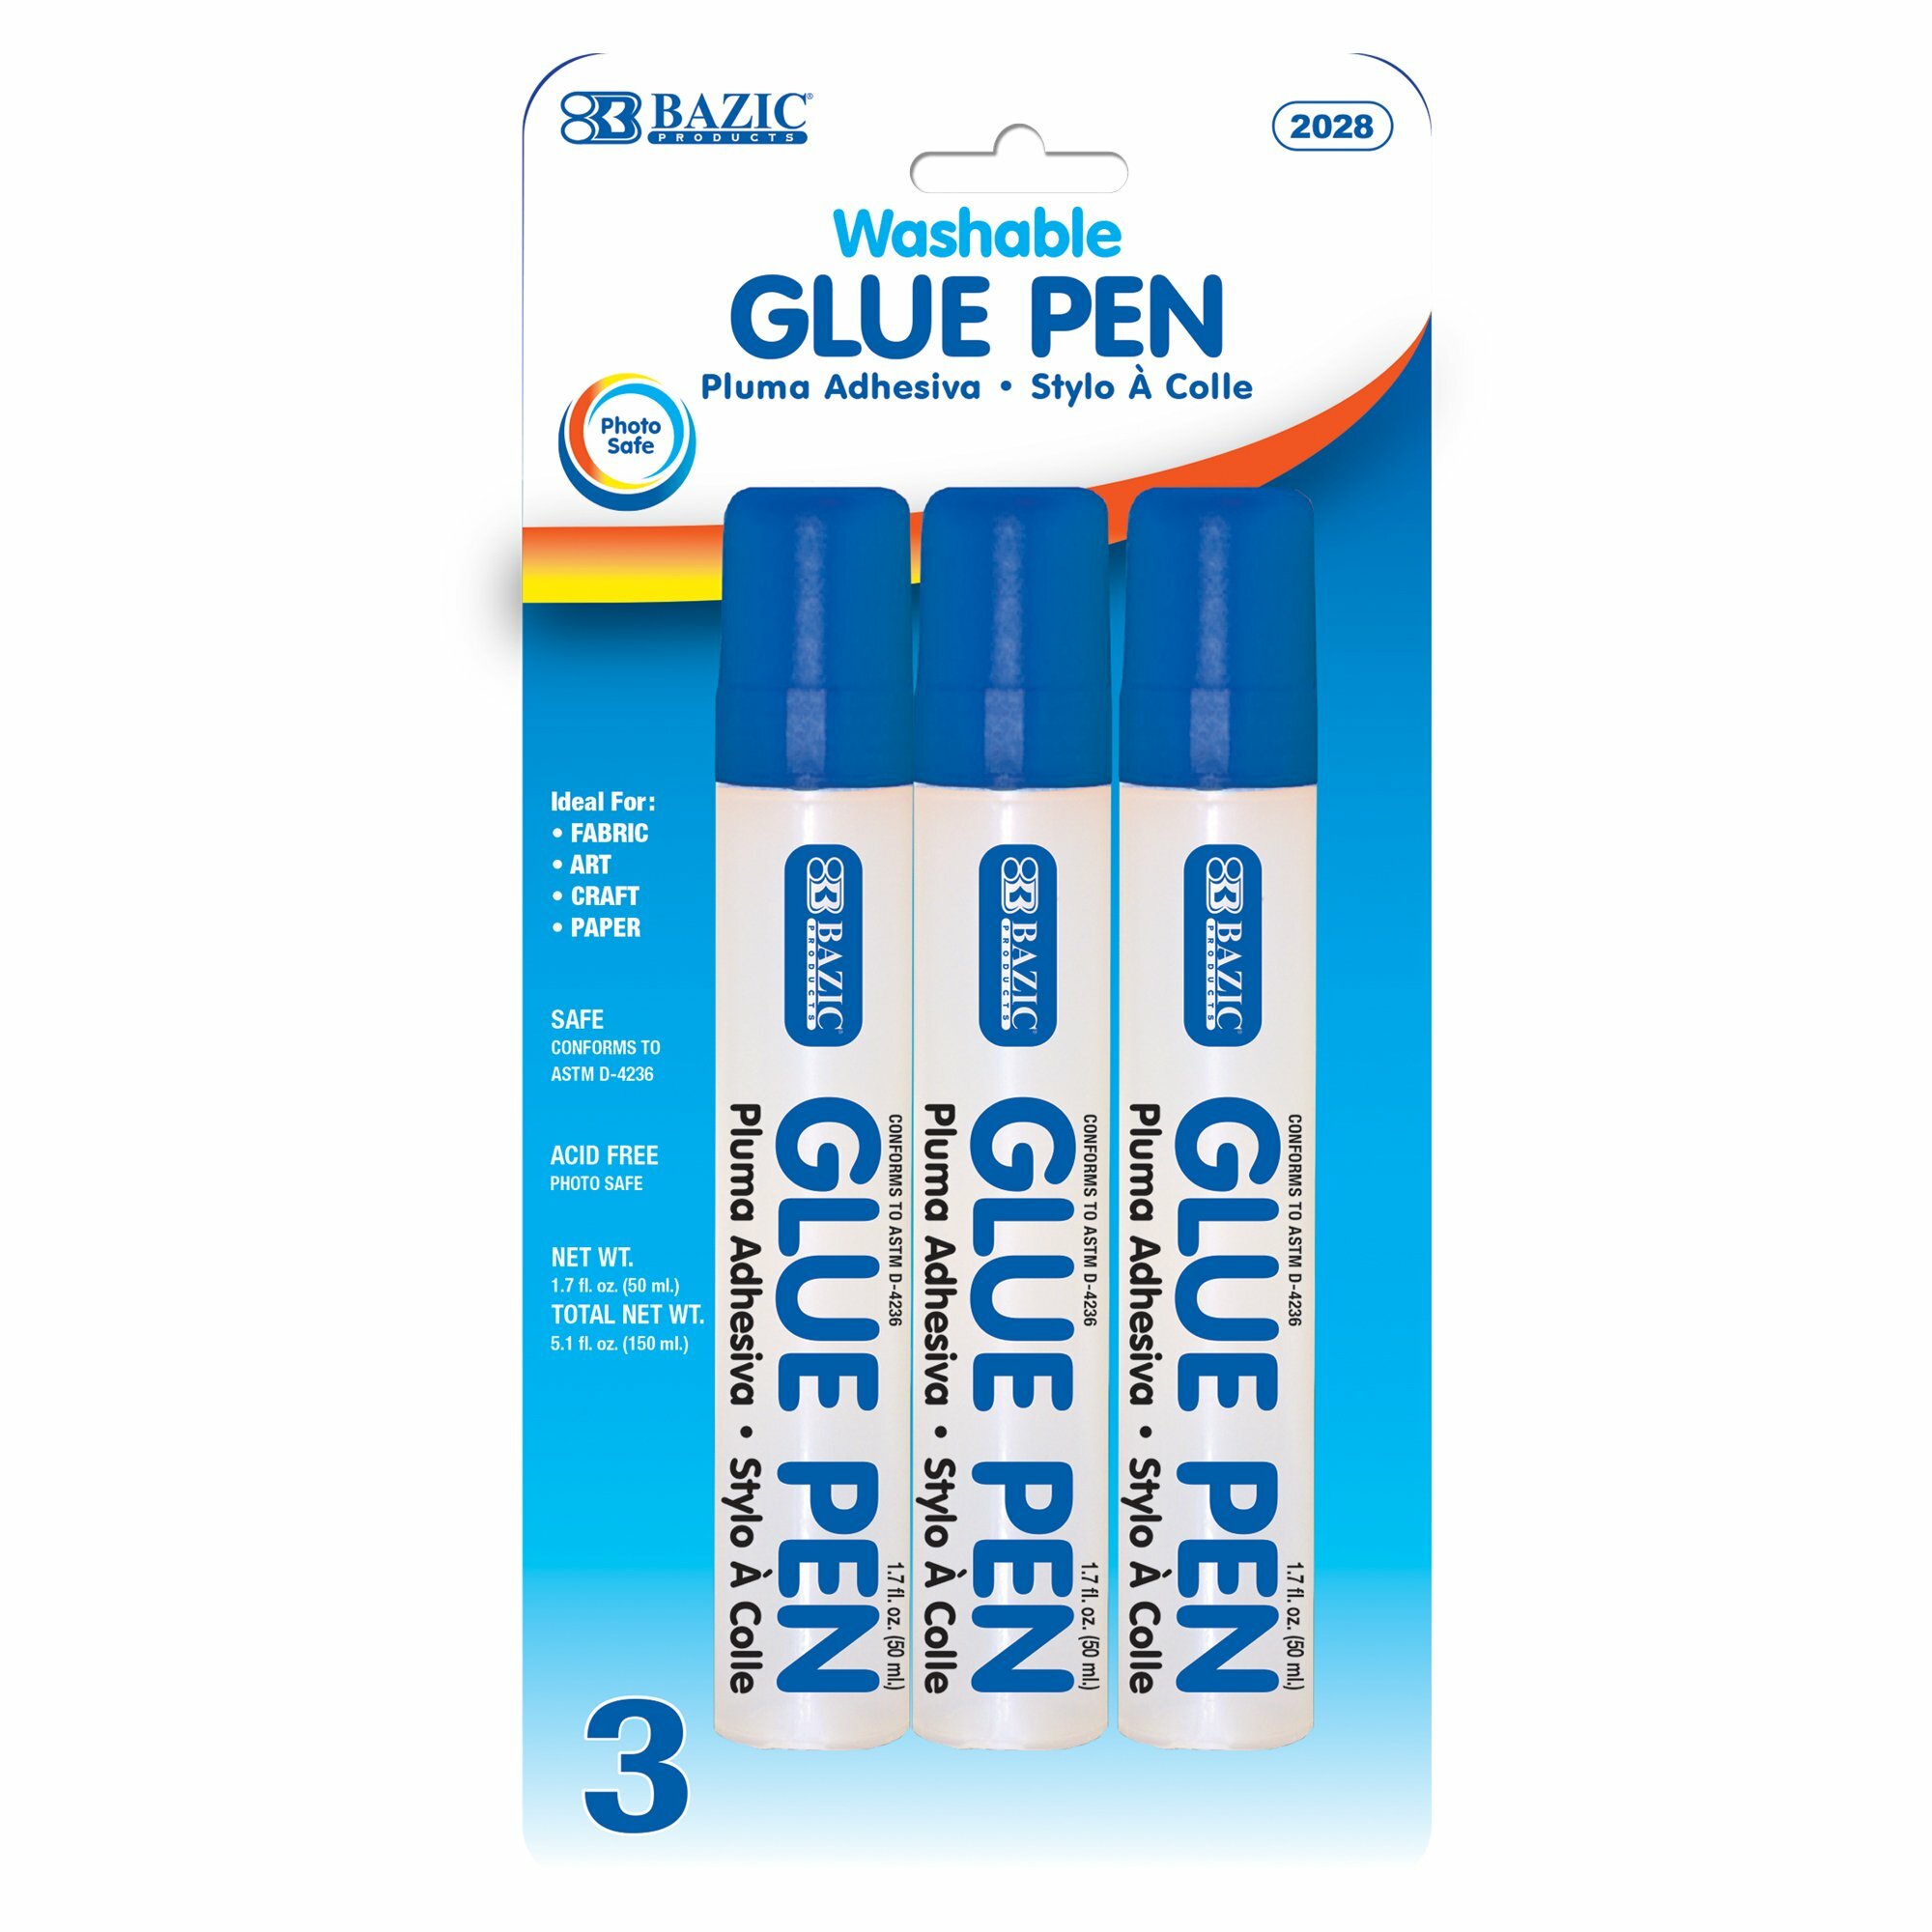 Glue/Pen (BAZ 2028)